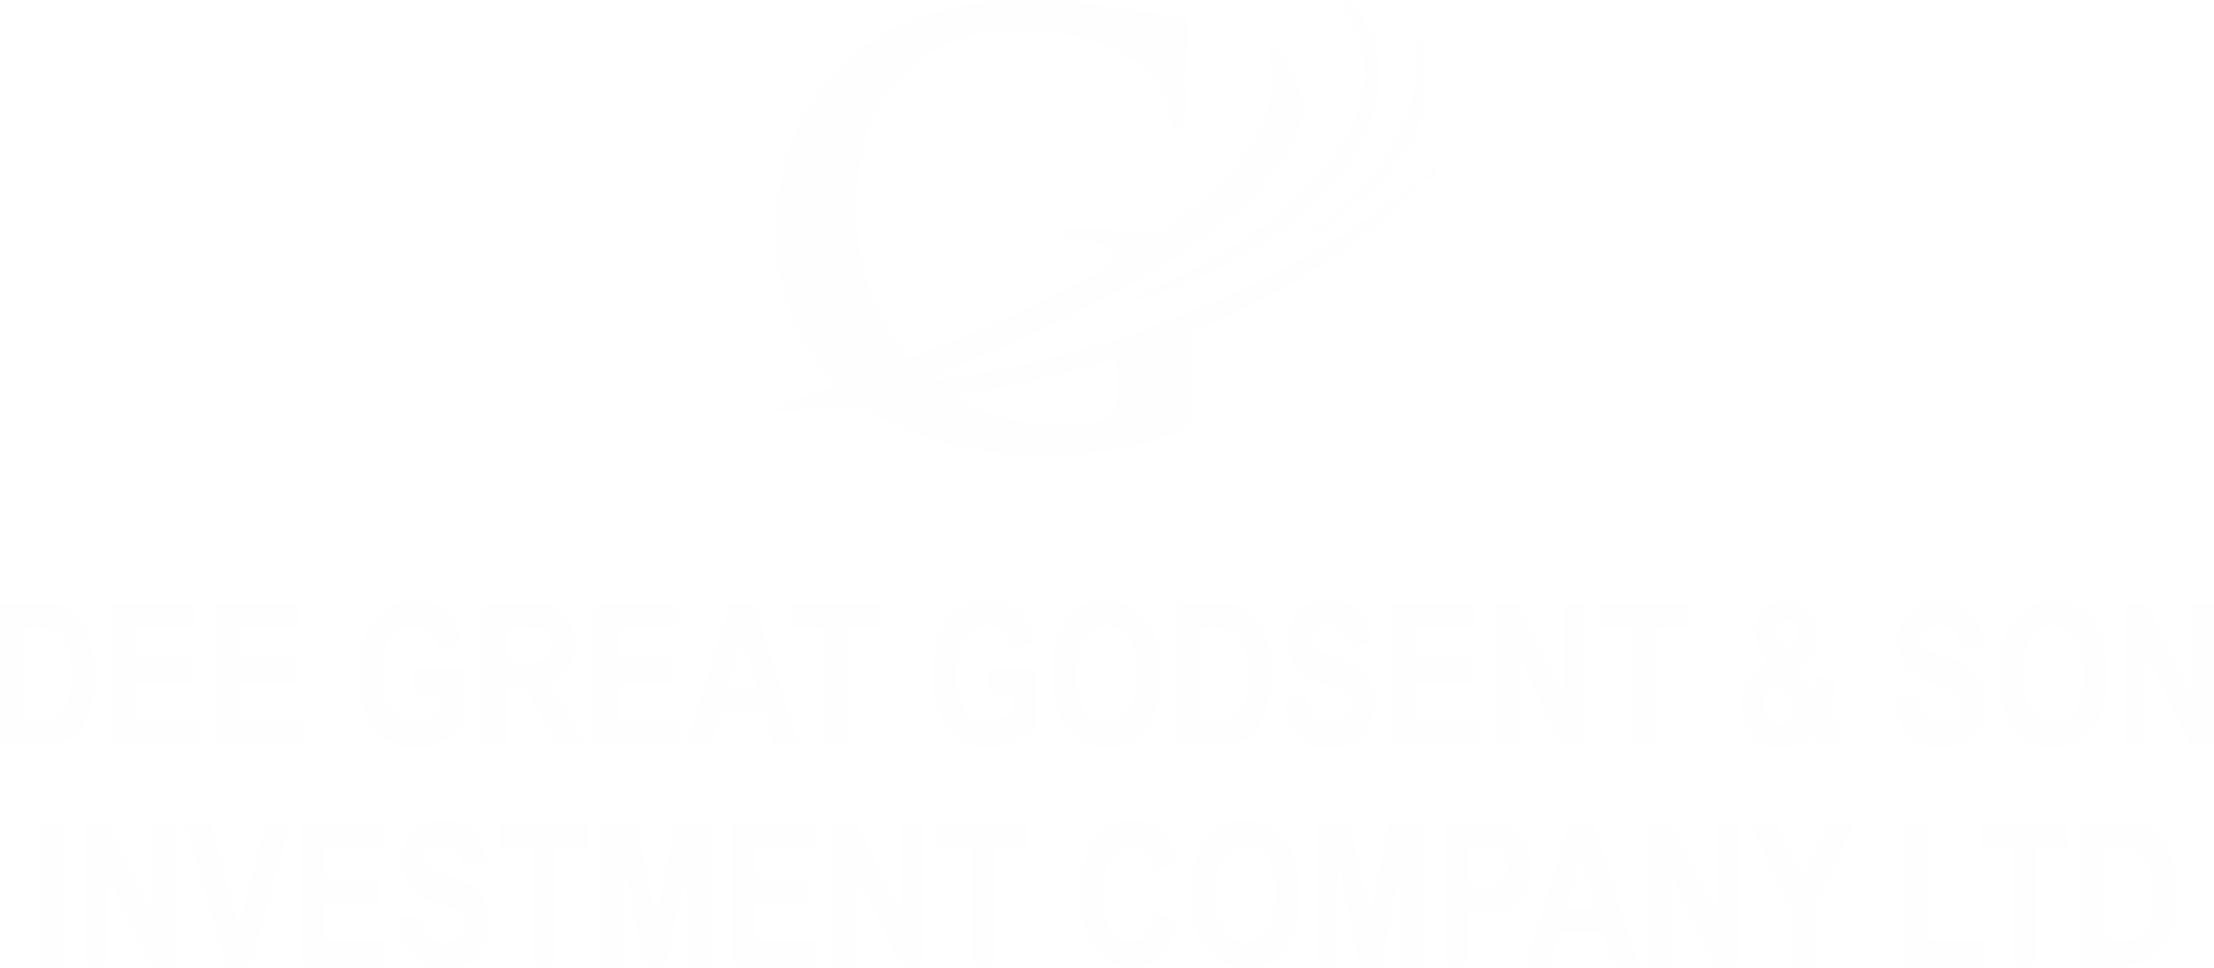 DGGS Investment Company Ltd